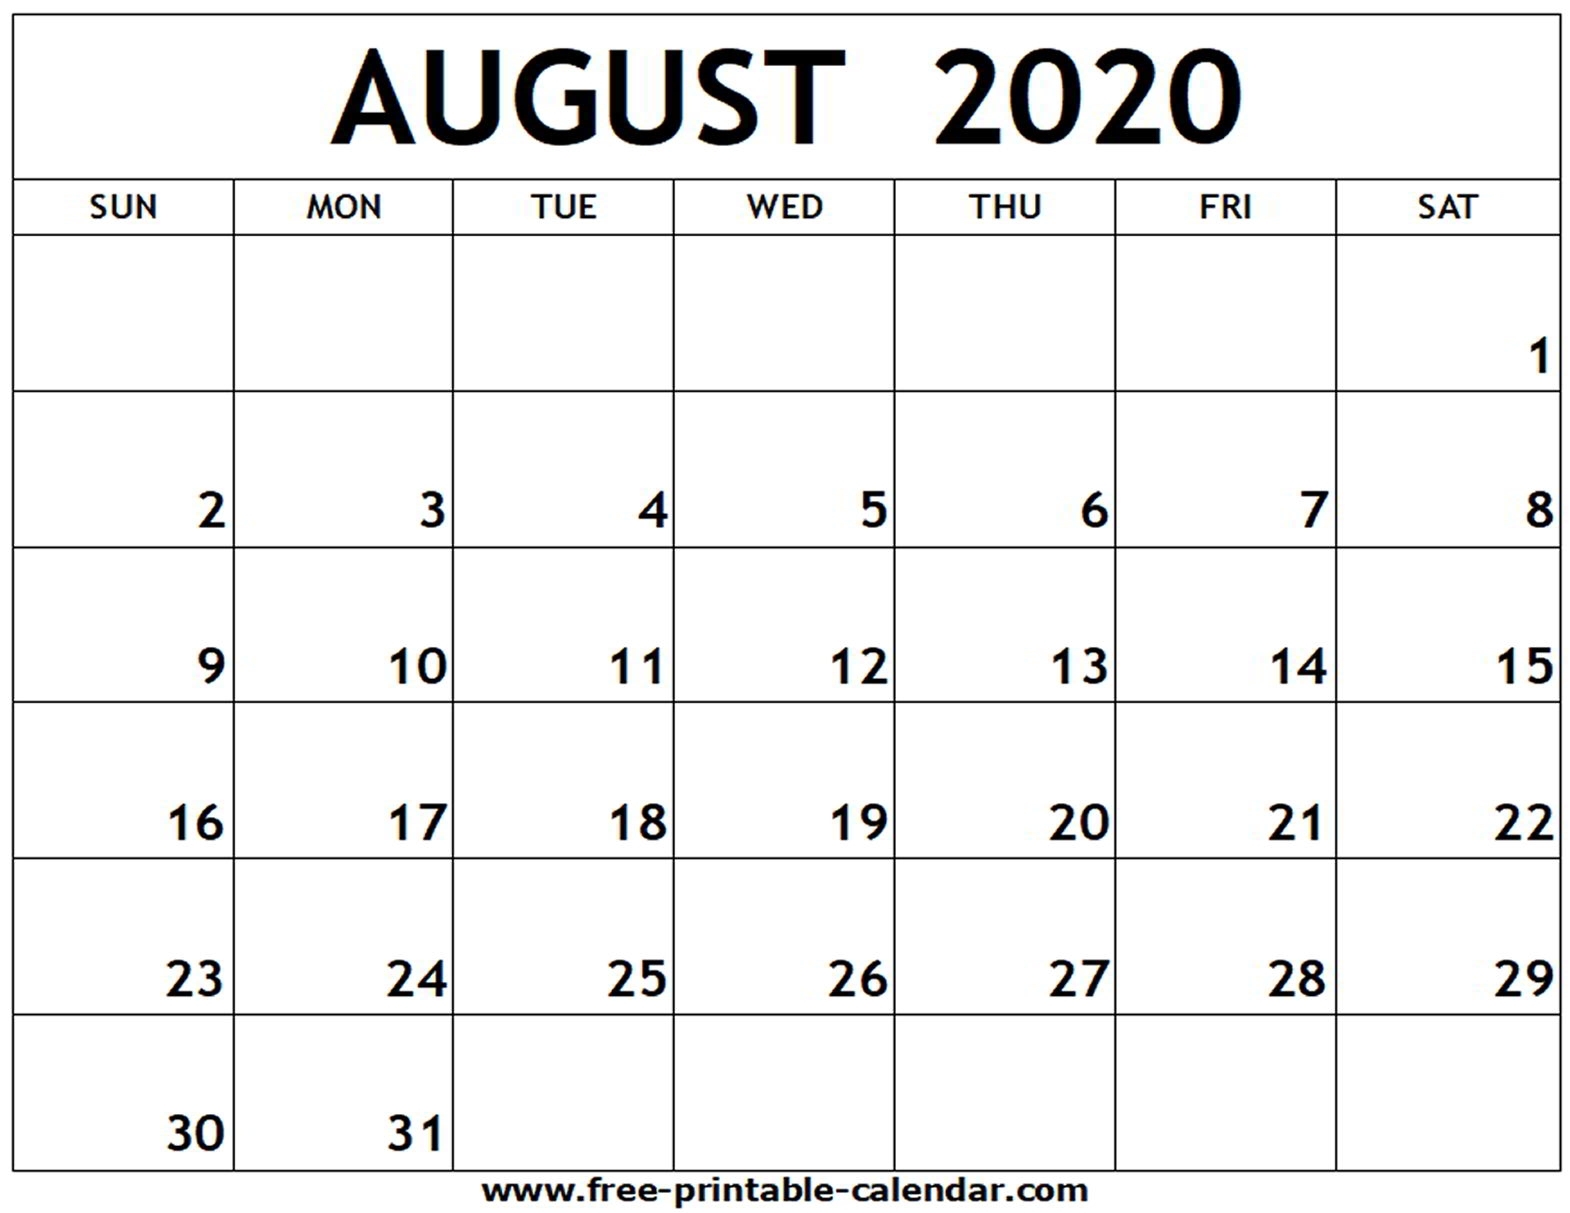 August 2020 Printable Calendar - Free-Printable-Calendar for Printable Fill In 2020 Calndar